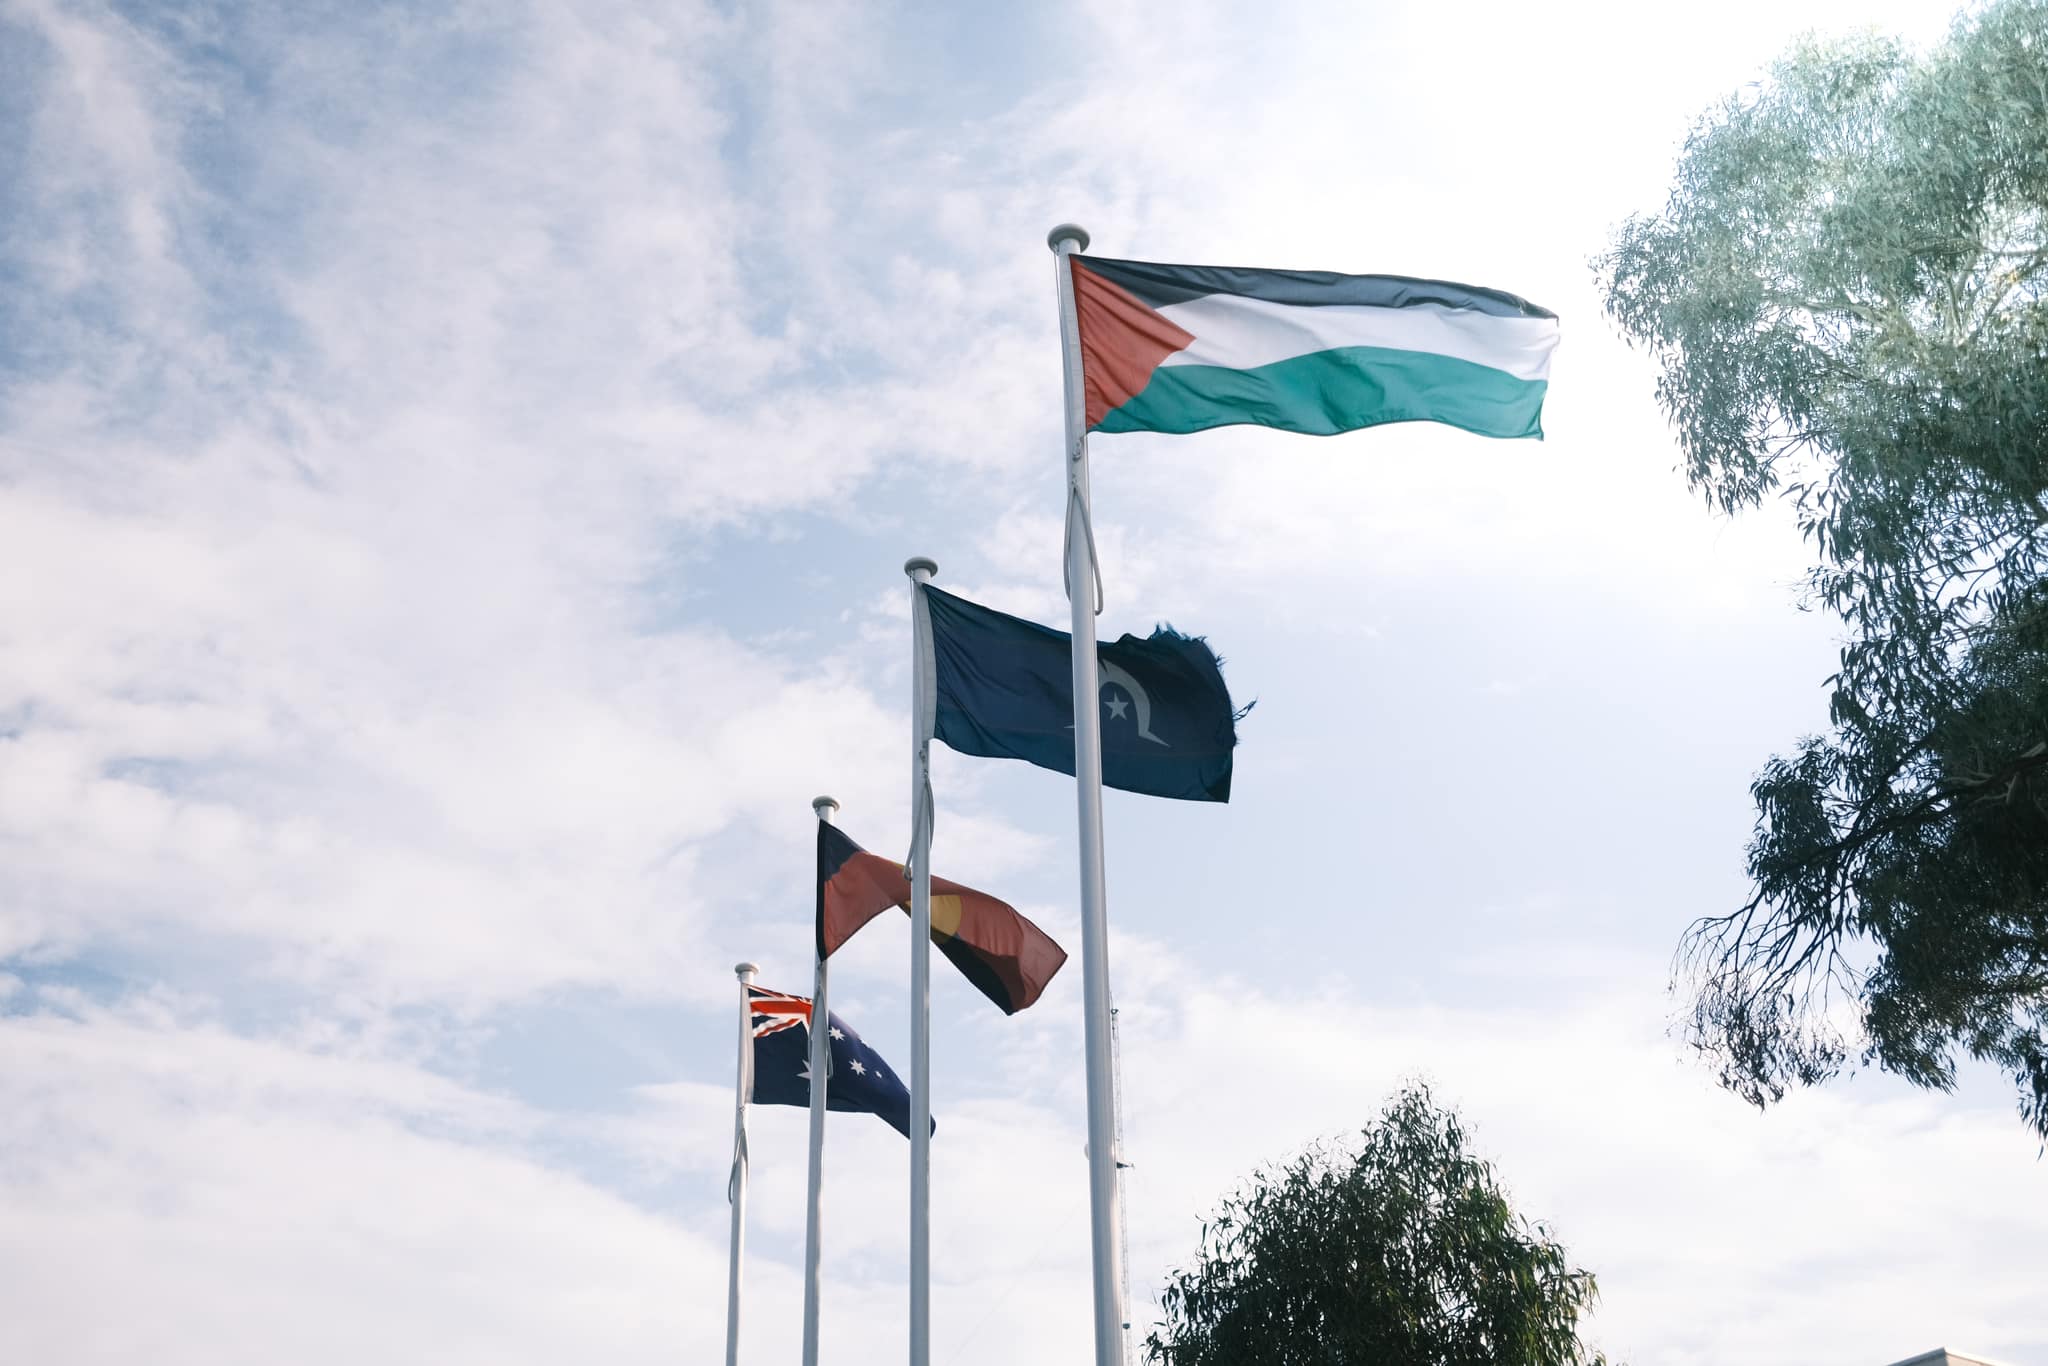 The Palestinian flag flying above Braybrook Community Hub